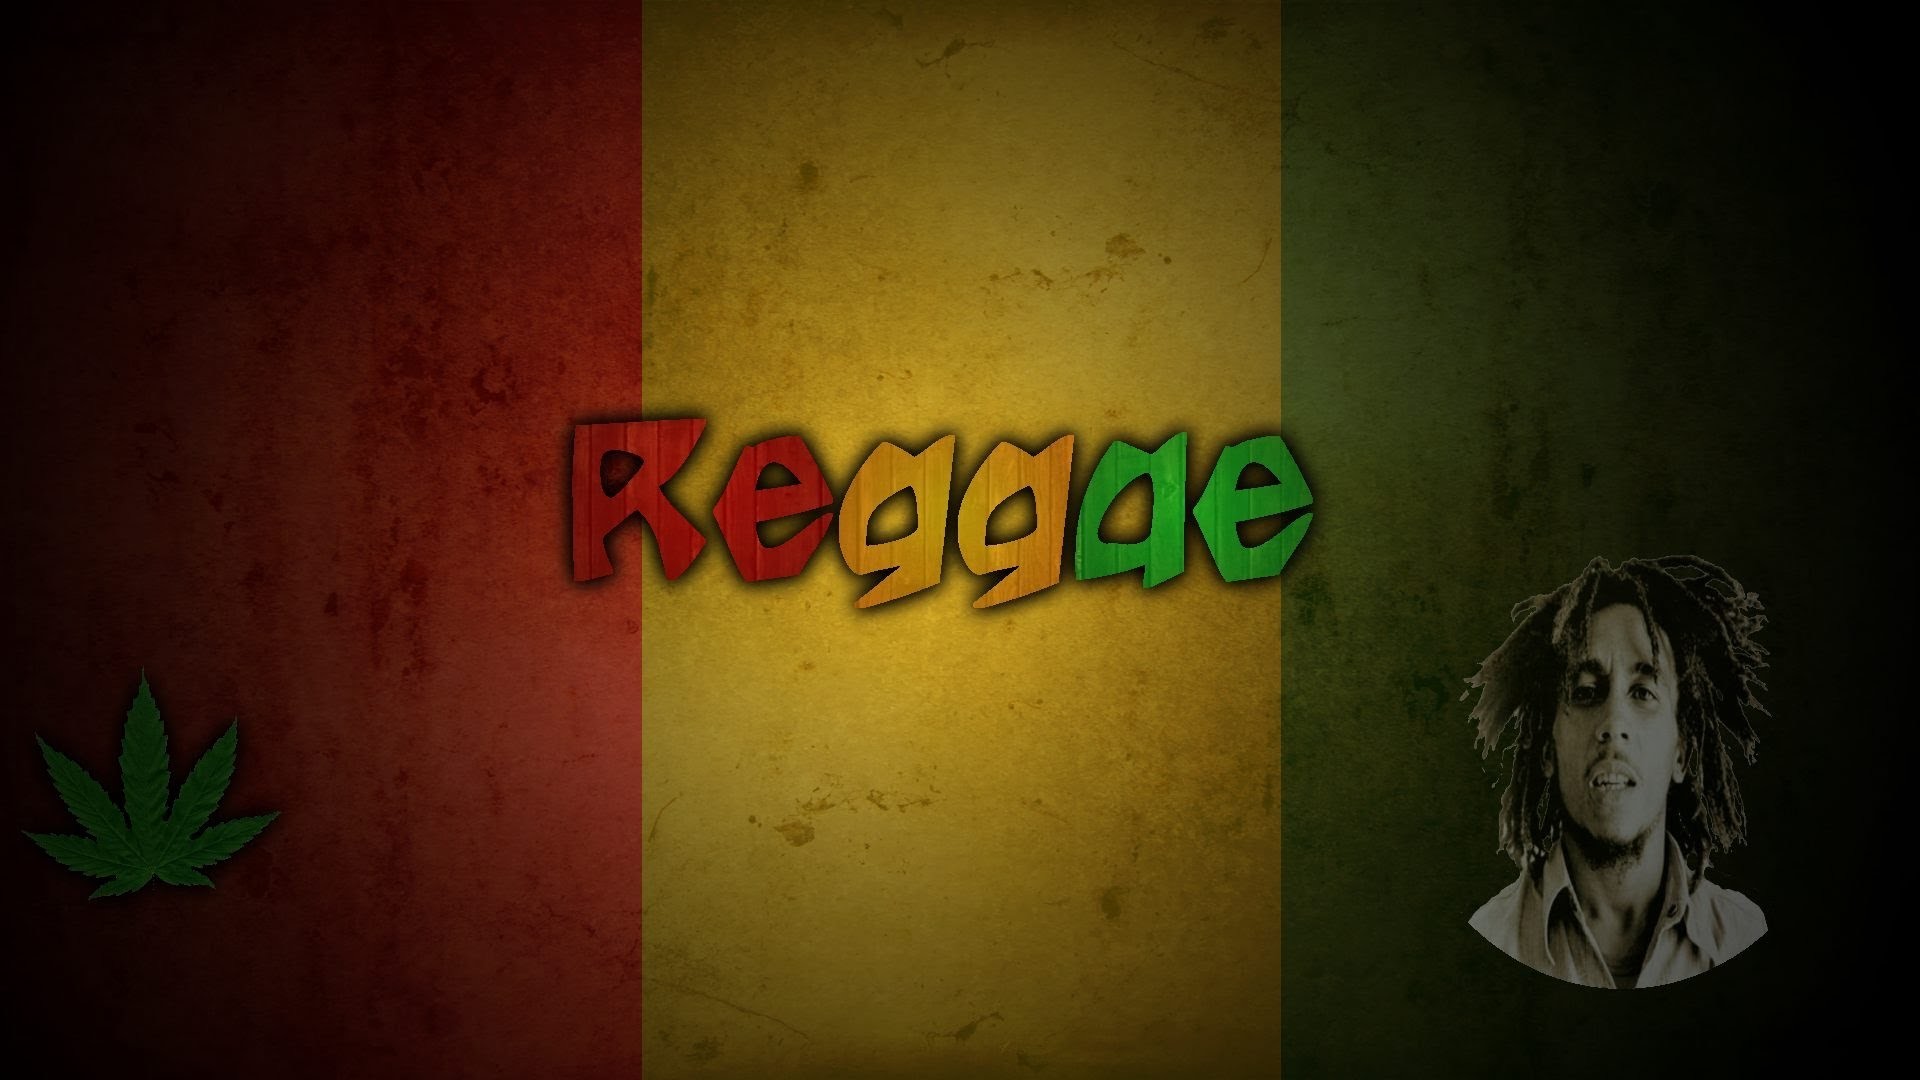 icon folder for pc free download reggae